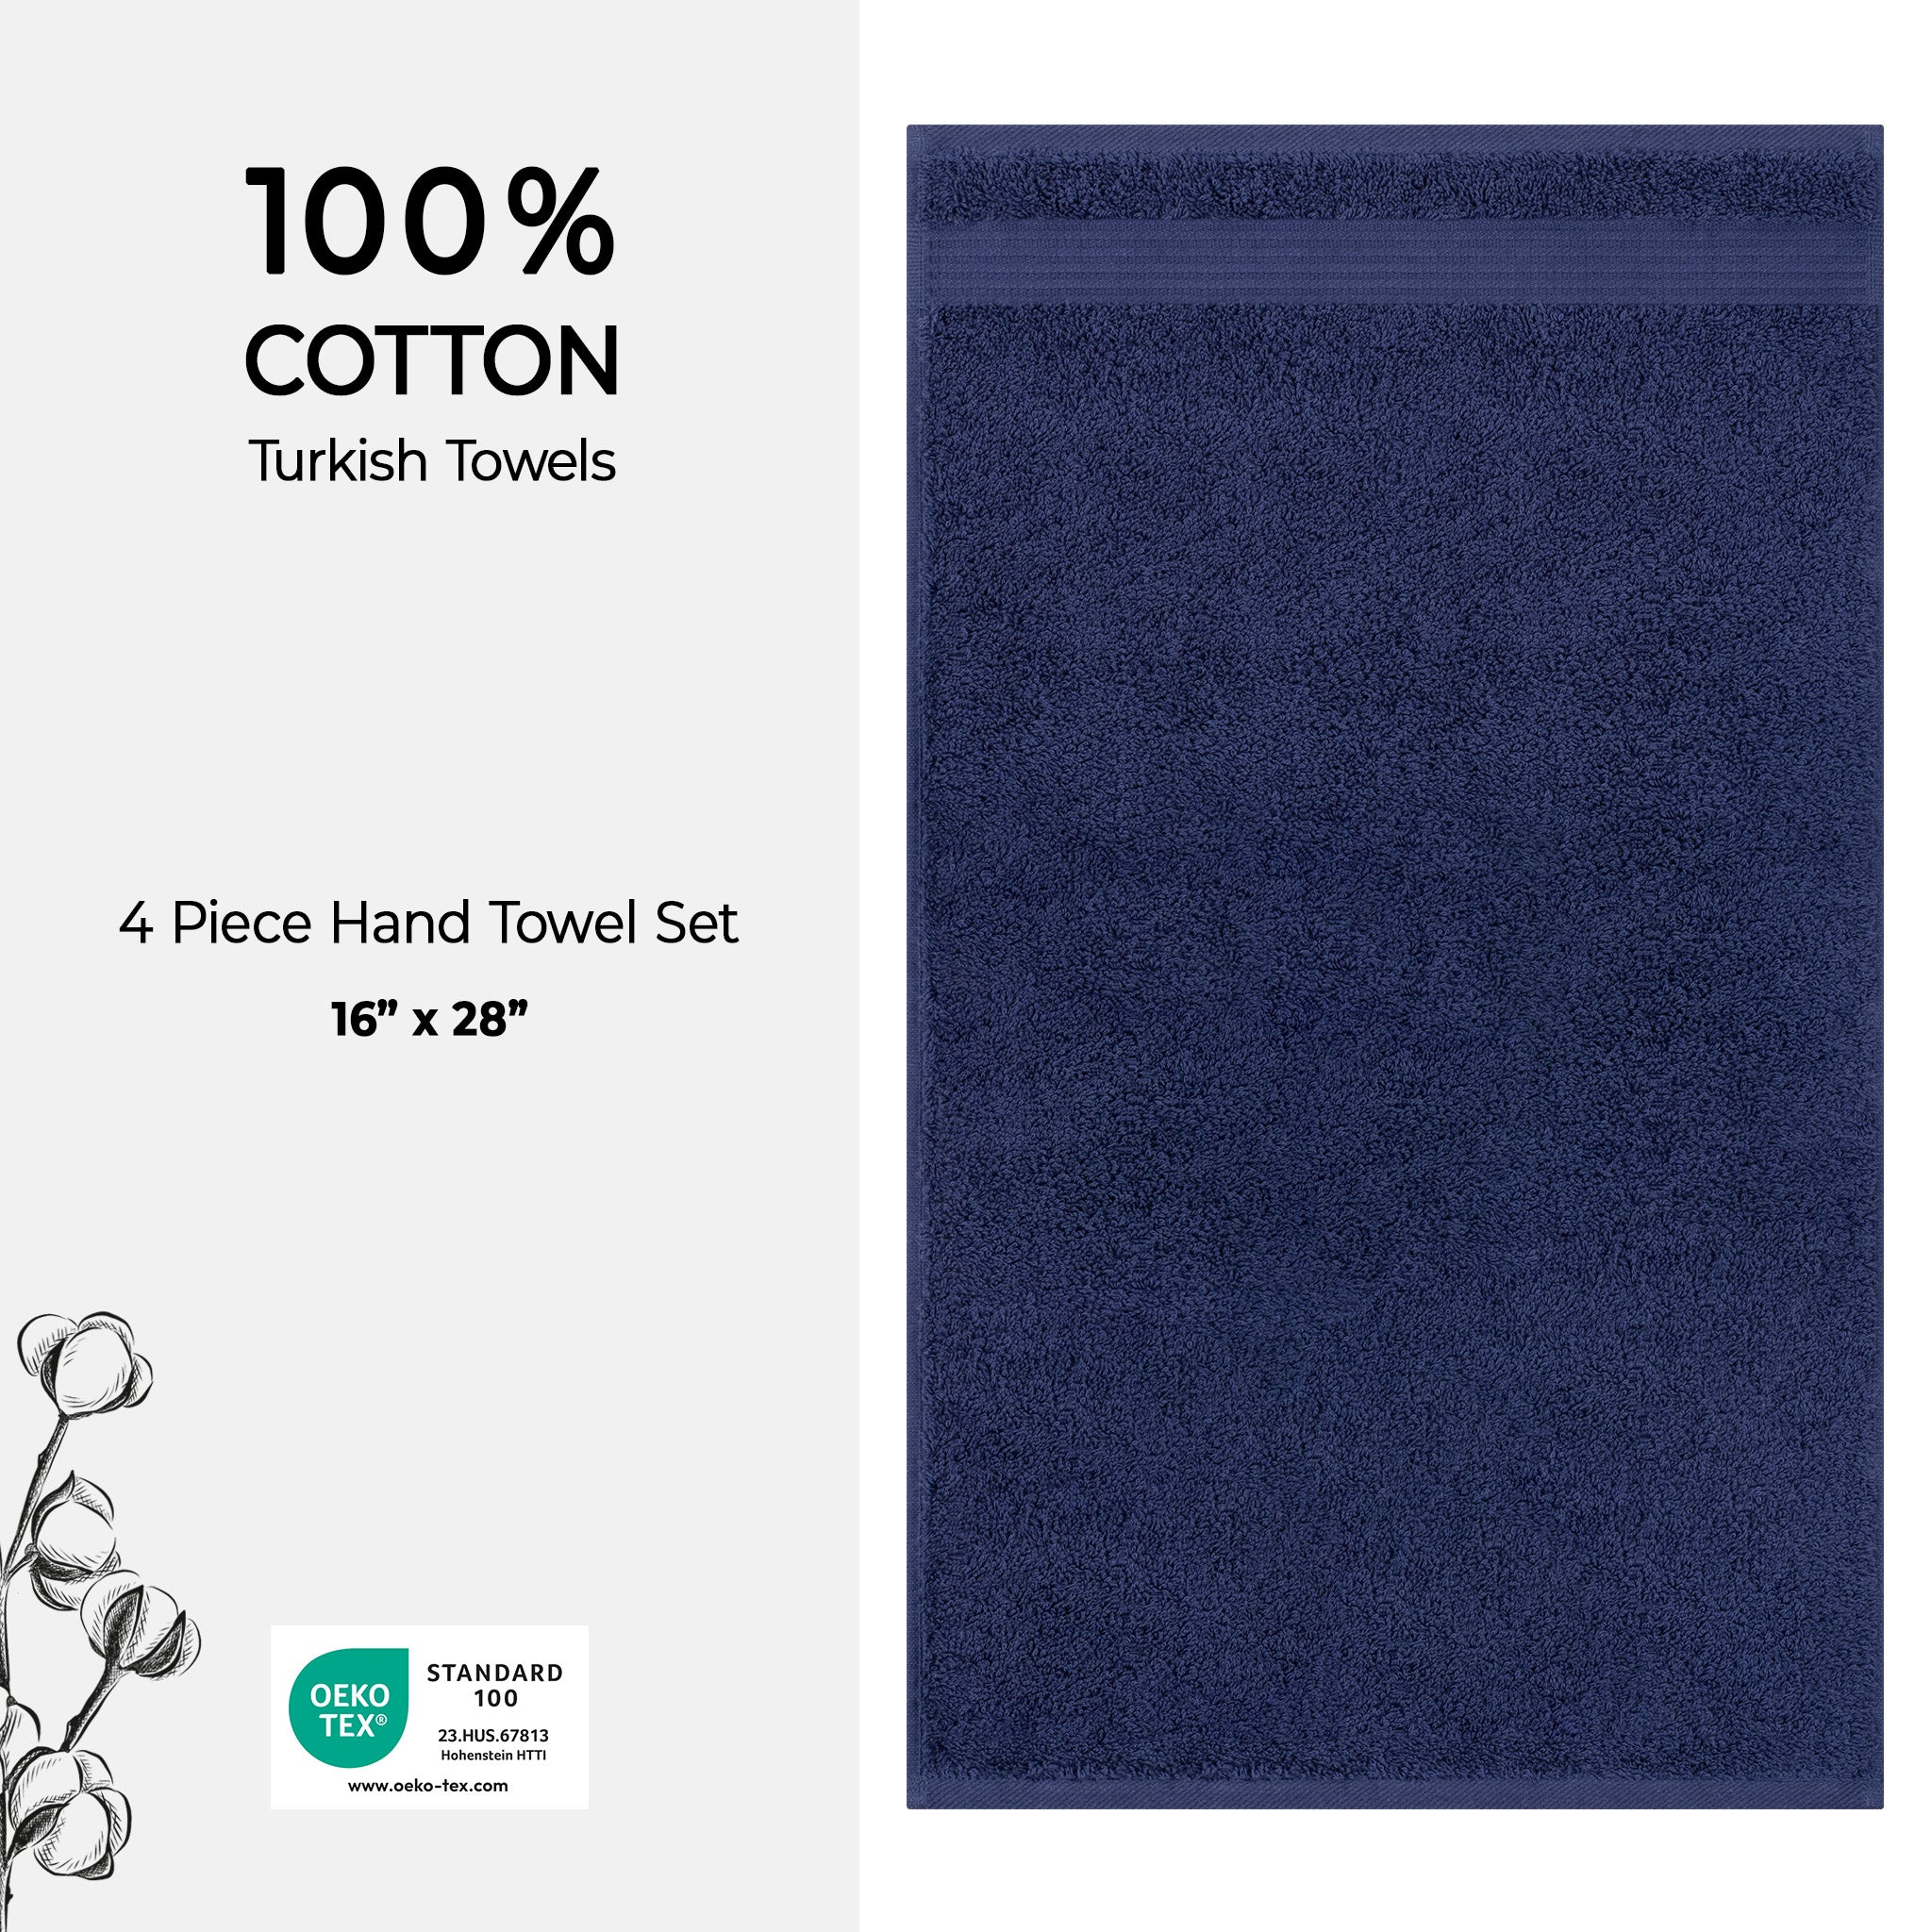 American Soft Linen Bekos 100% Cotton Turkish Towels, 4 Piece Hand Towel Set -navy-blue-04